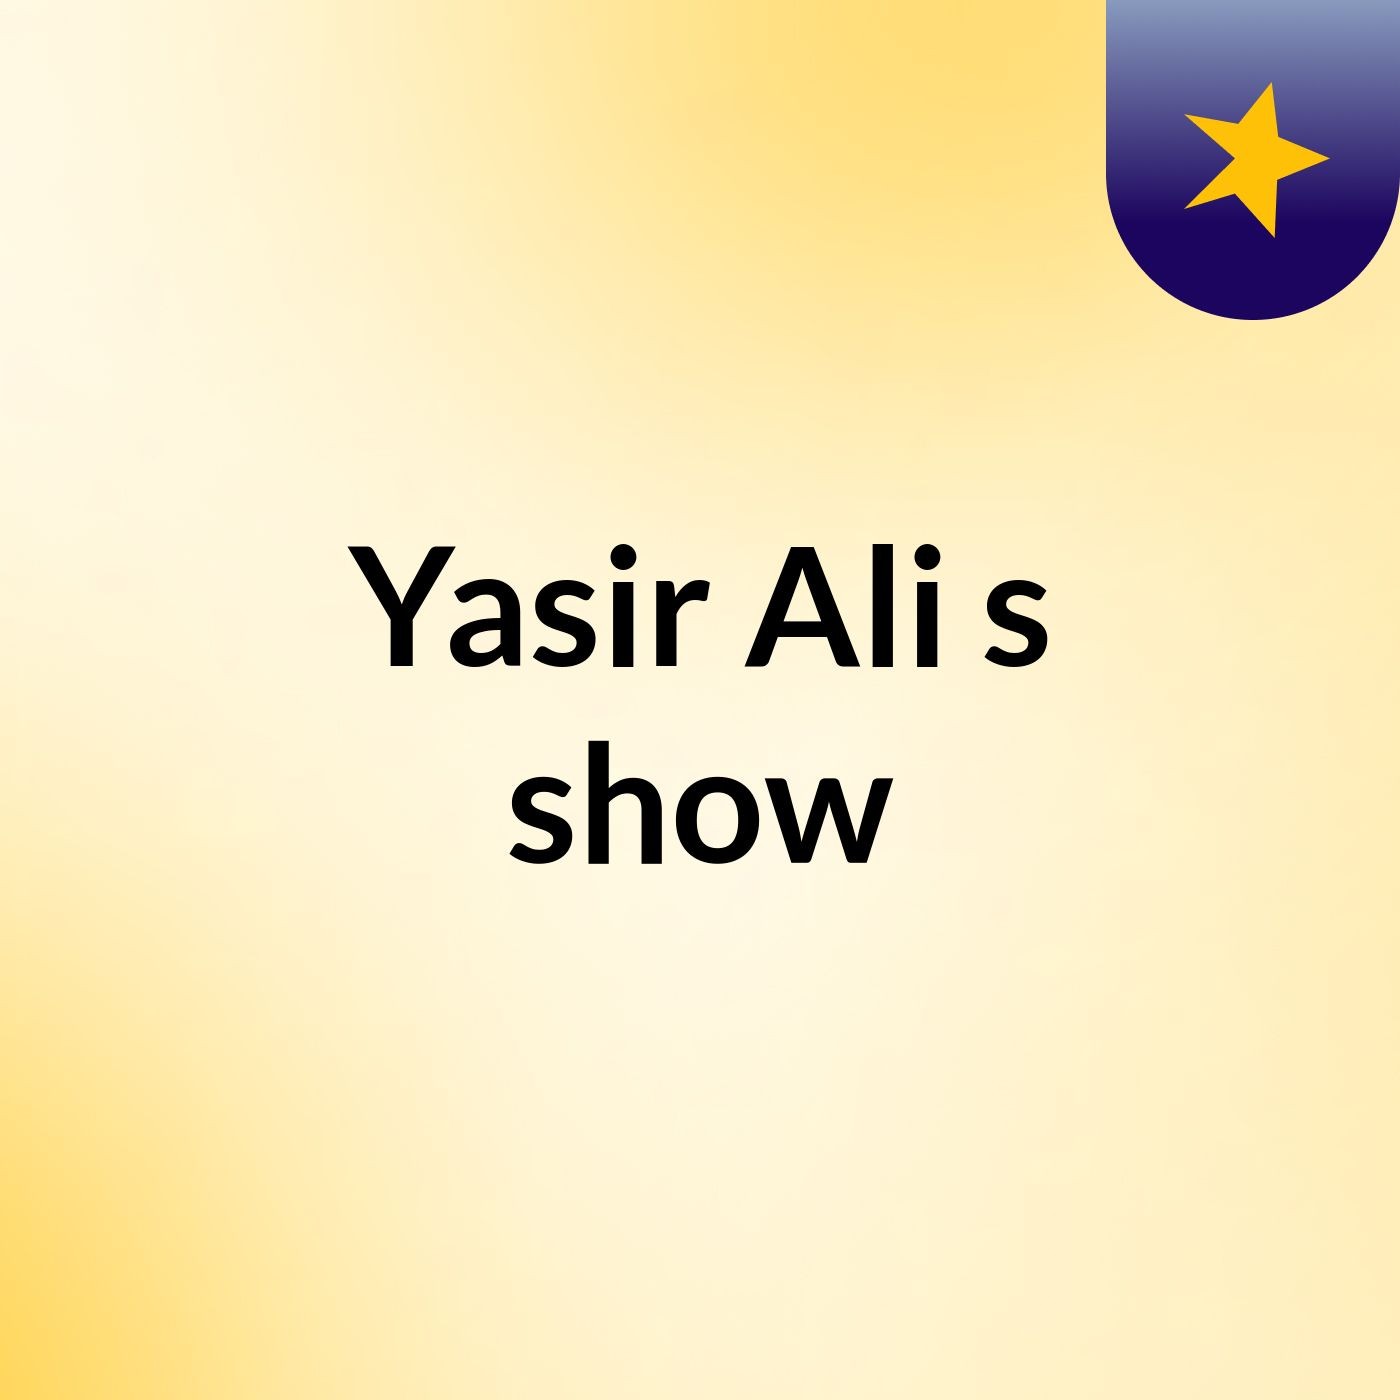 Yasir Ali's show